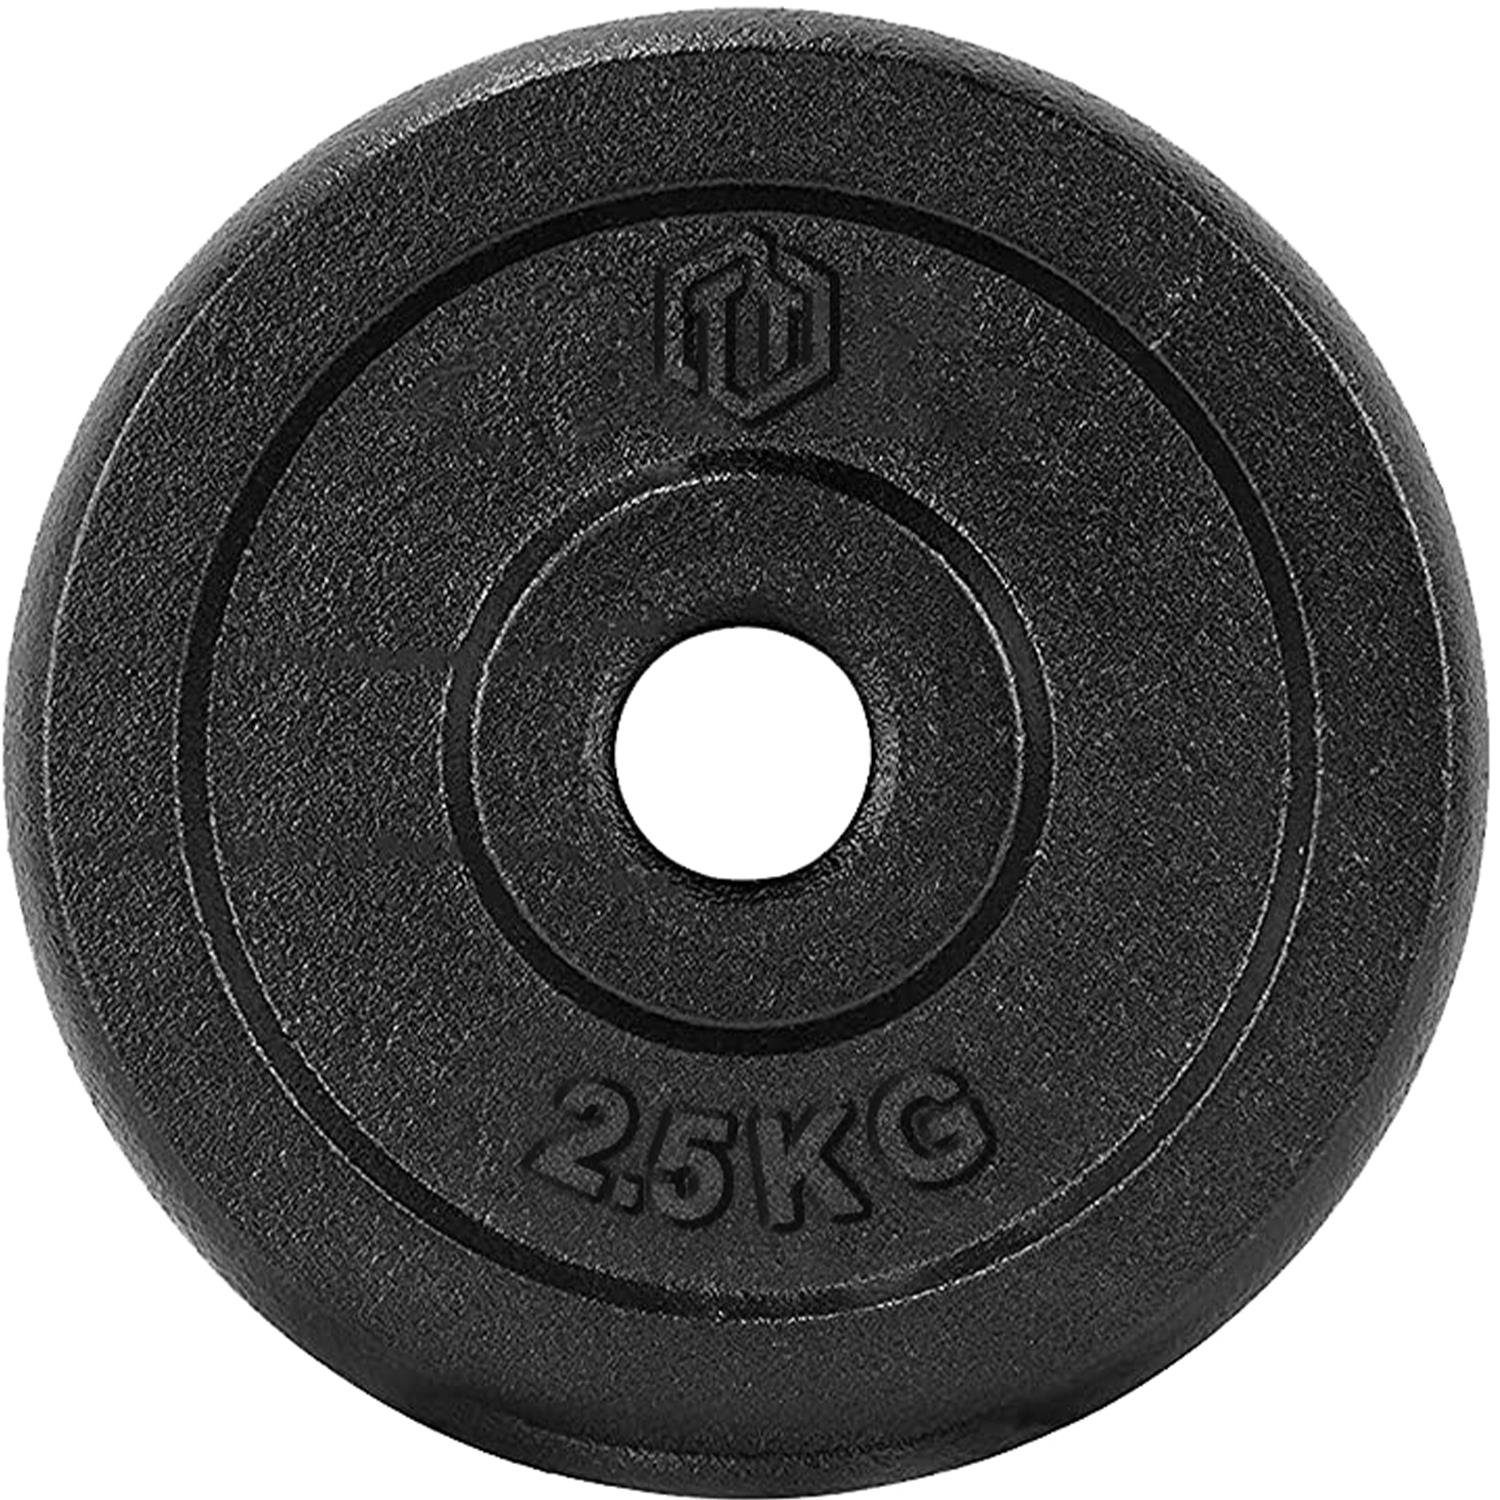 24 30/31mm, Sporttrend Hantelscheiben 2,5KG Gewichtsscheibe Hantelscheibe Gusseisen